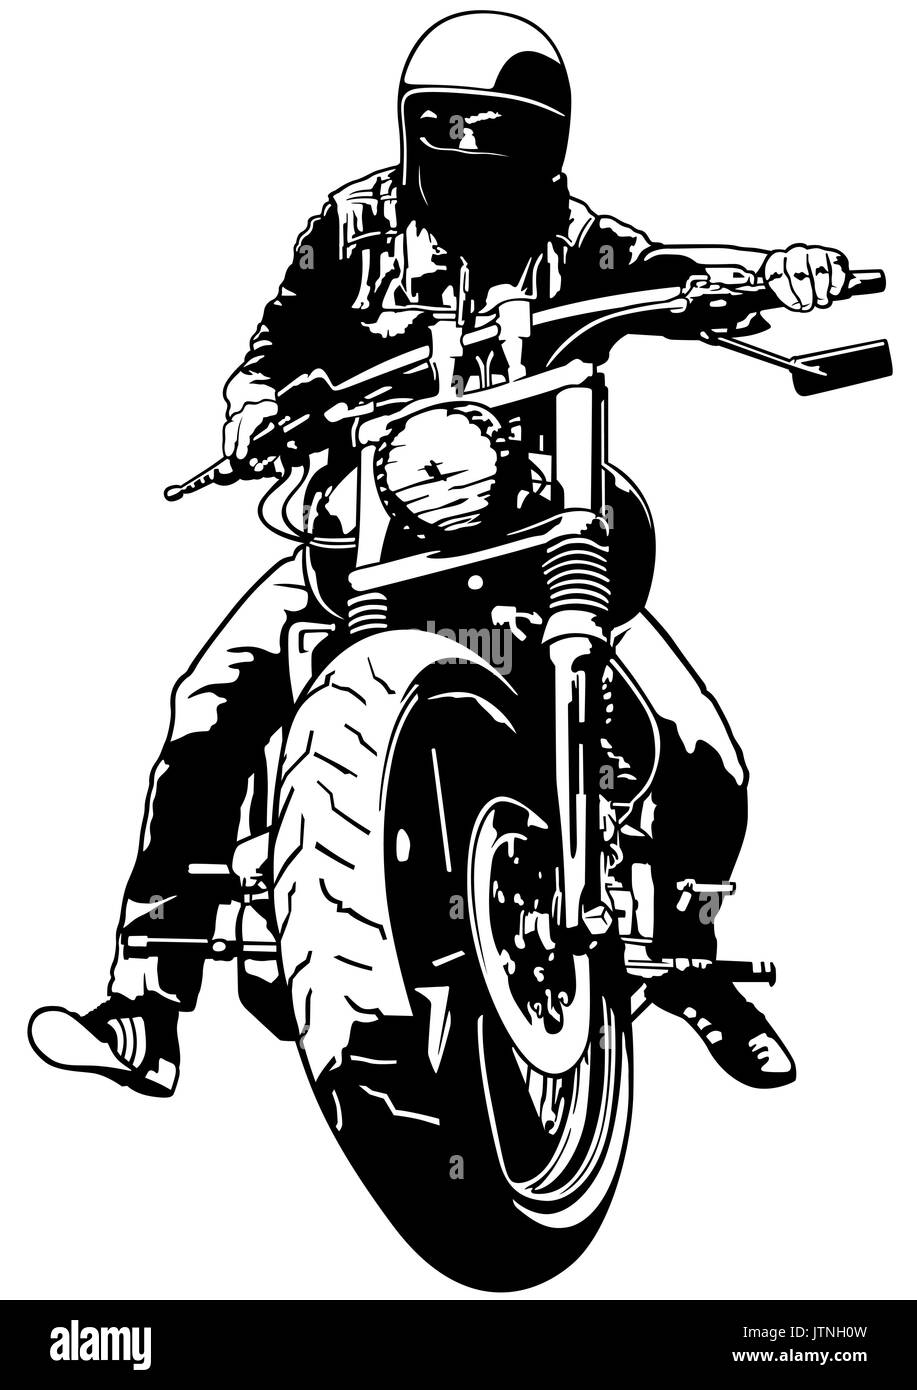 Harley Davidson et Rider Illustration de Vecteur